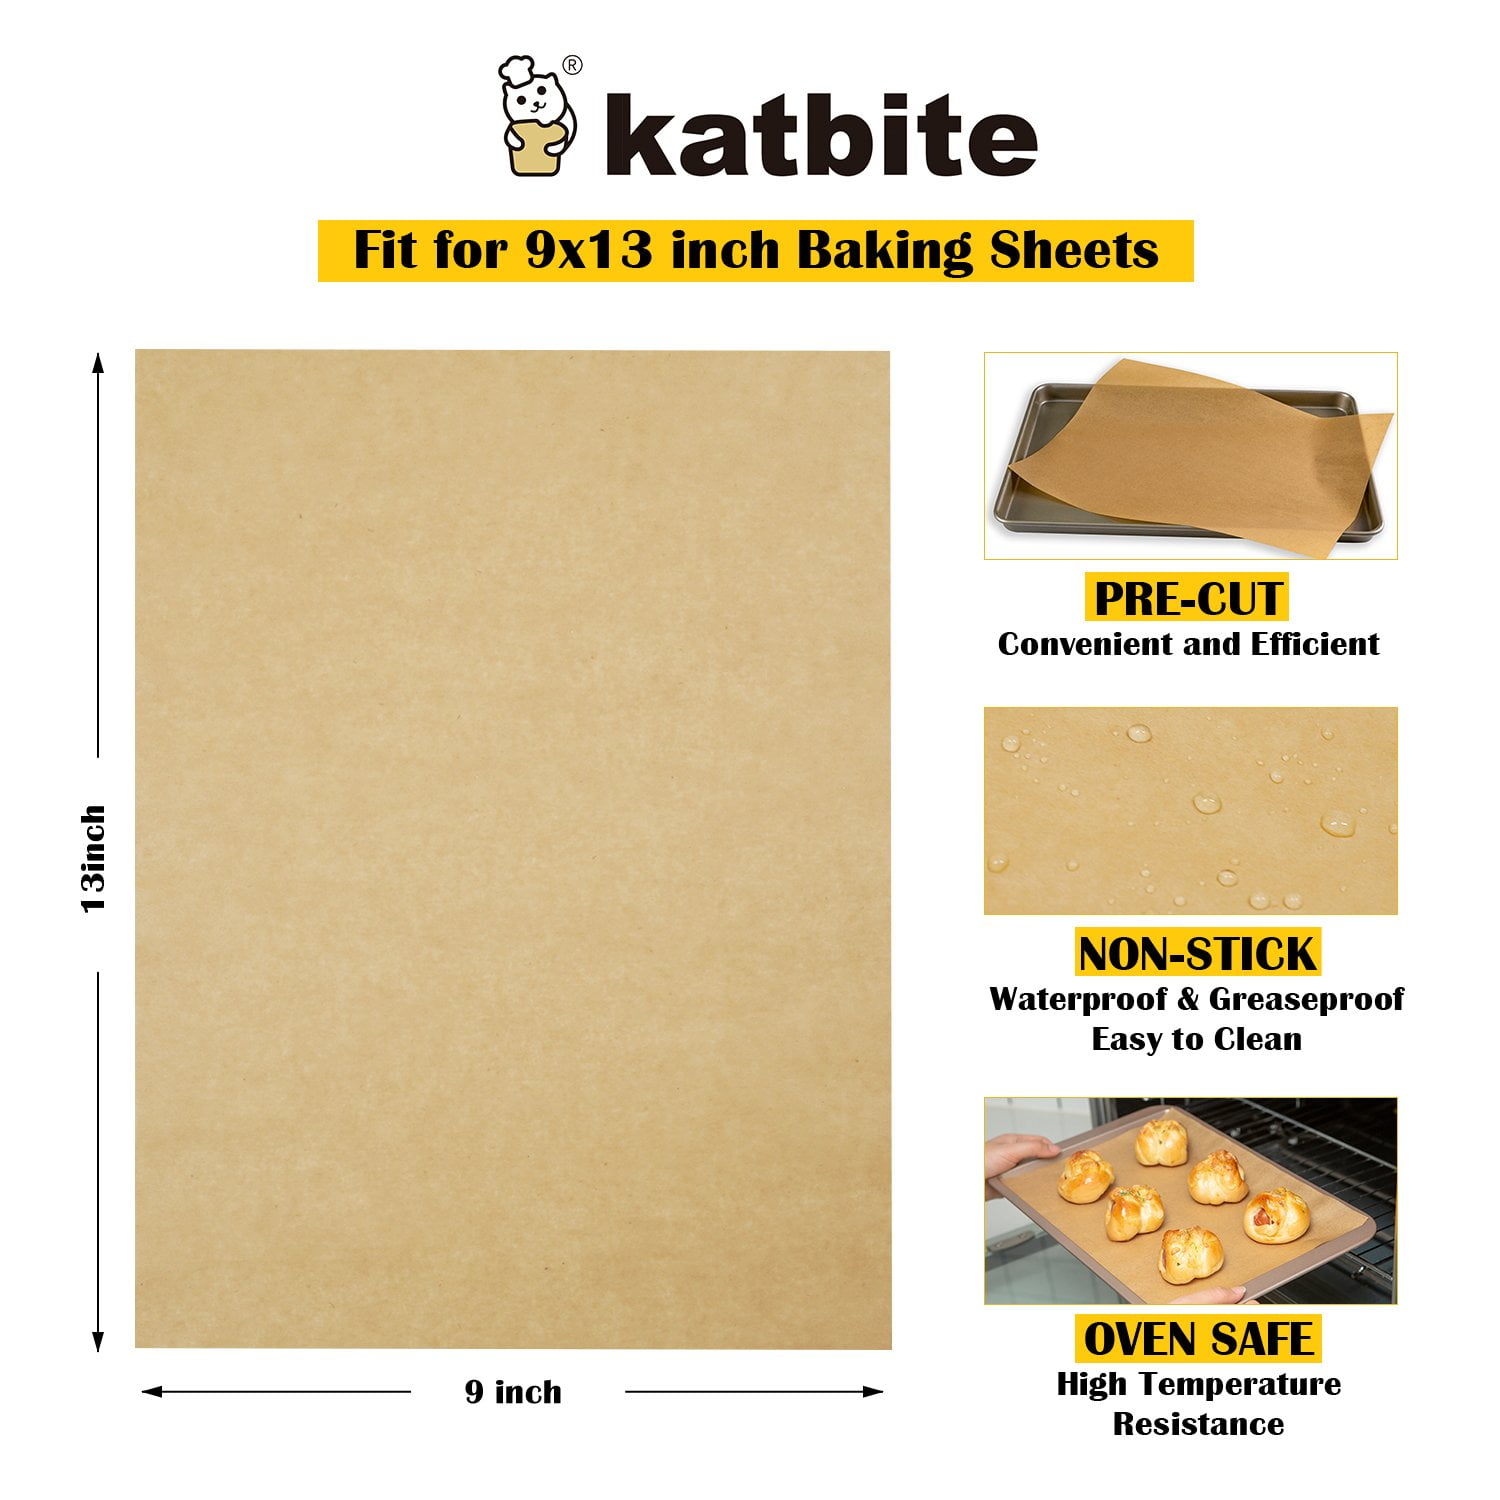 Parchment Paper Sheets — 200 Sheets – Breadtopia